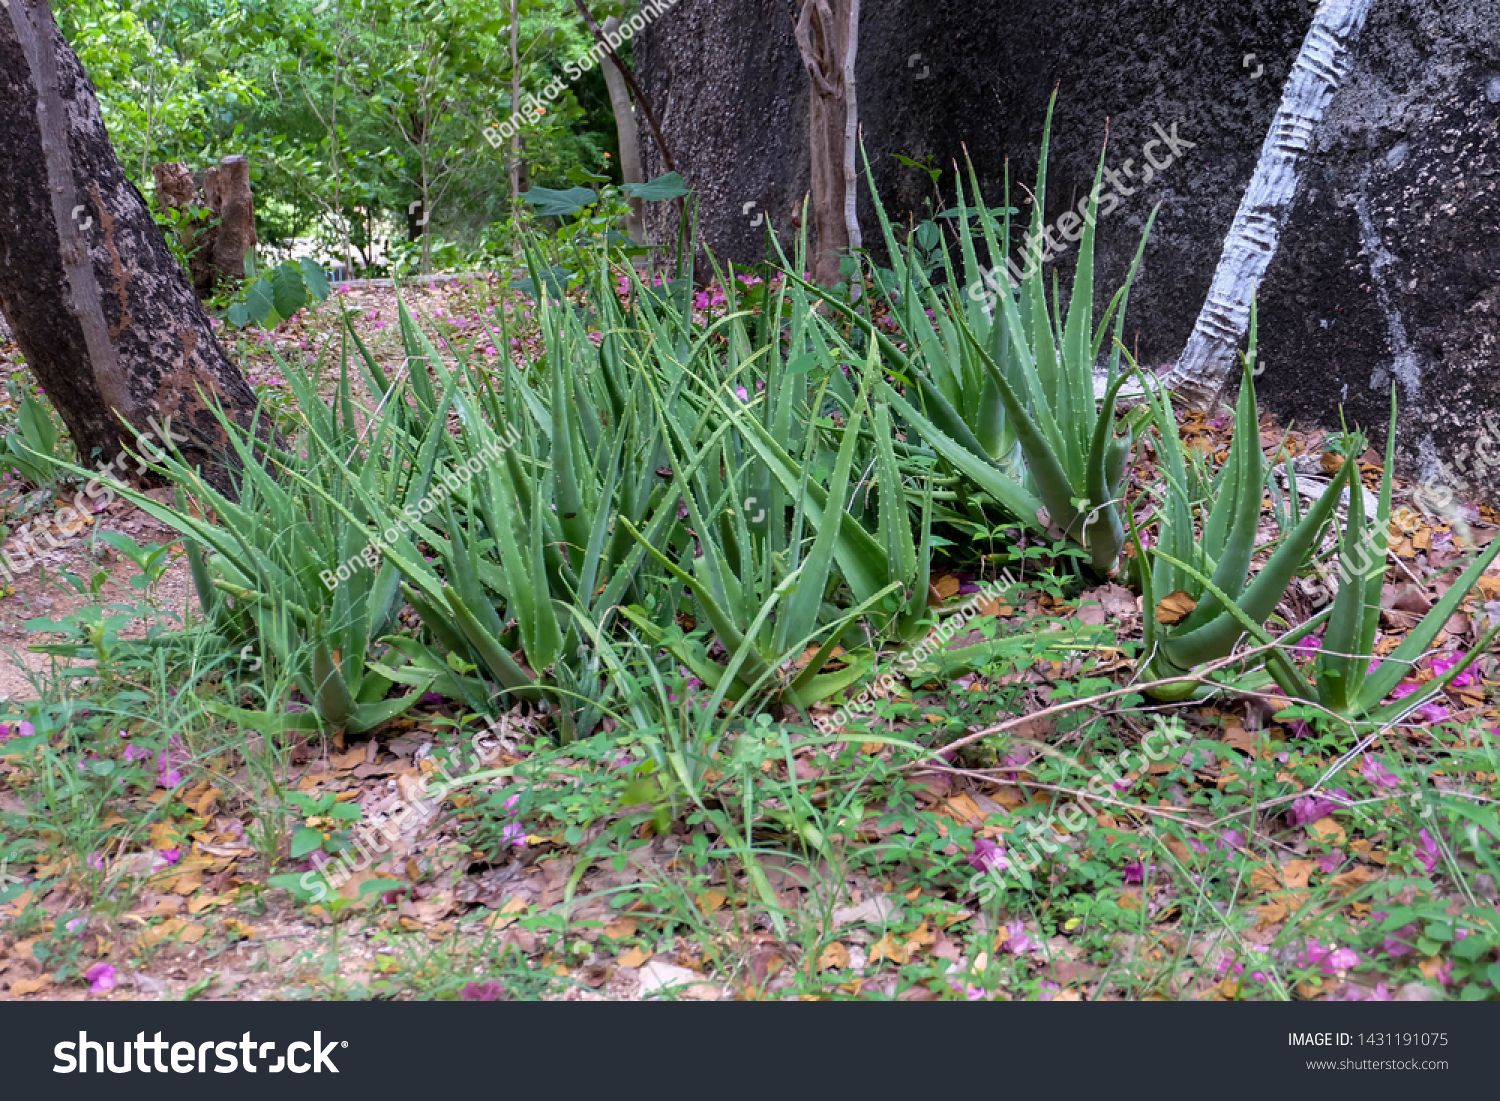 Many Aloe Vera Gardenforest Photo 1431191075 | Shutterstock